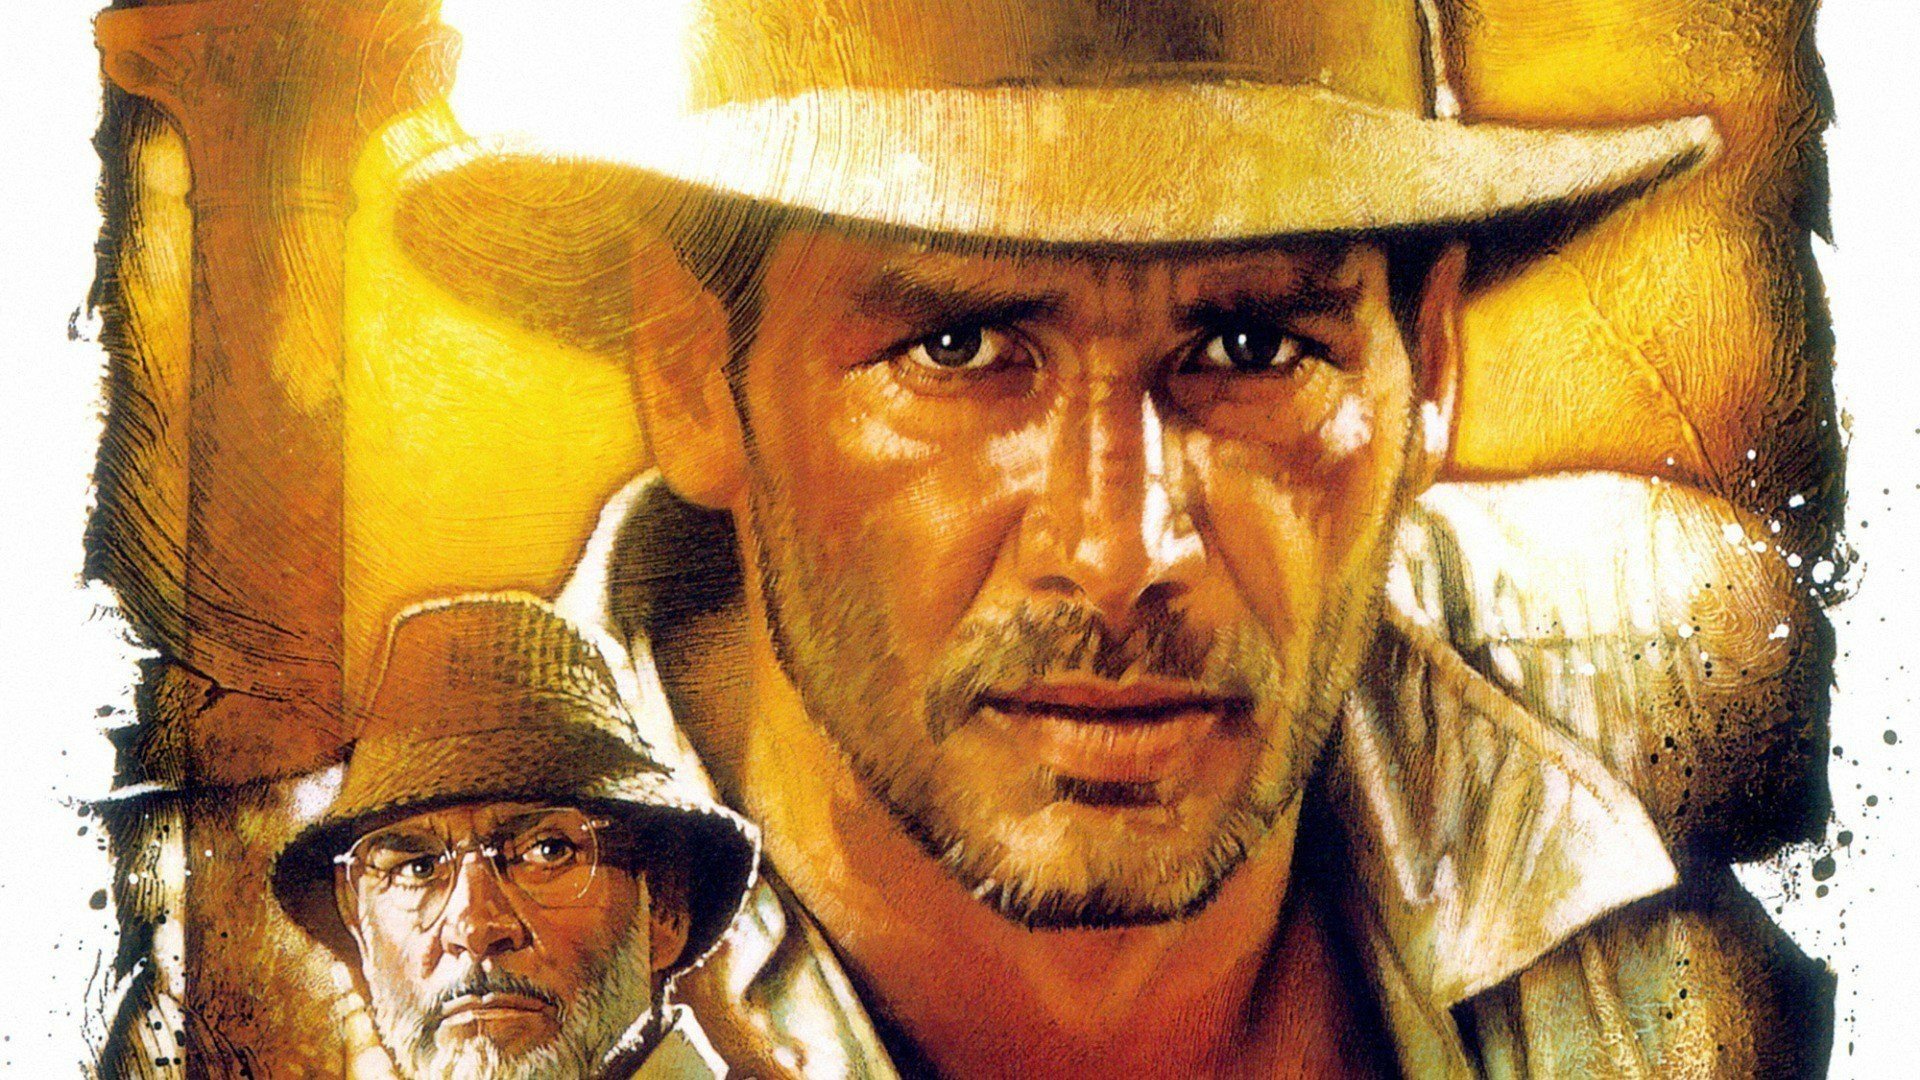 Indiana Jones key art